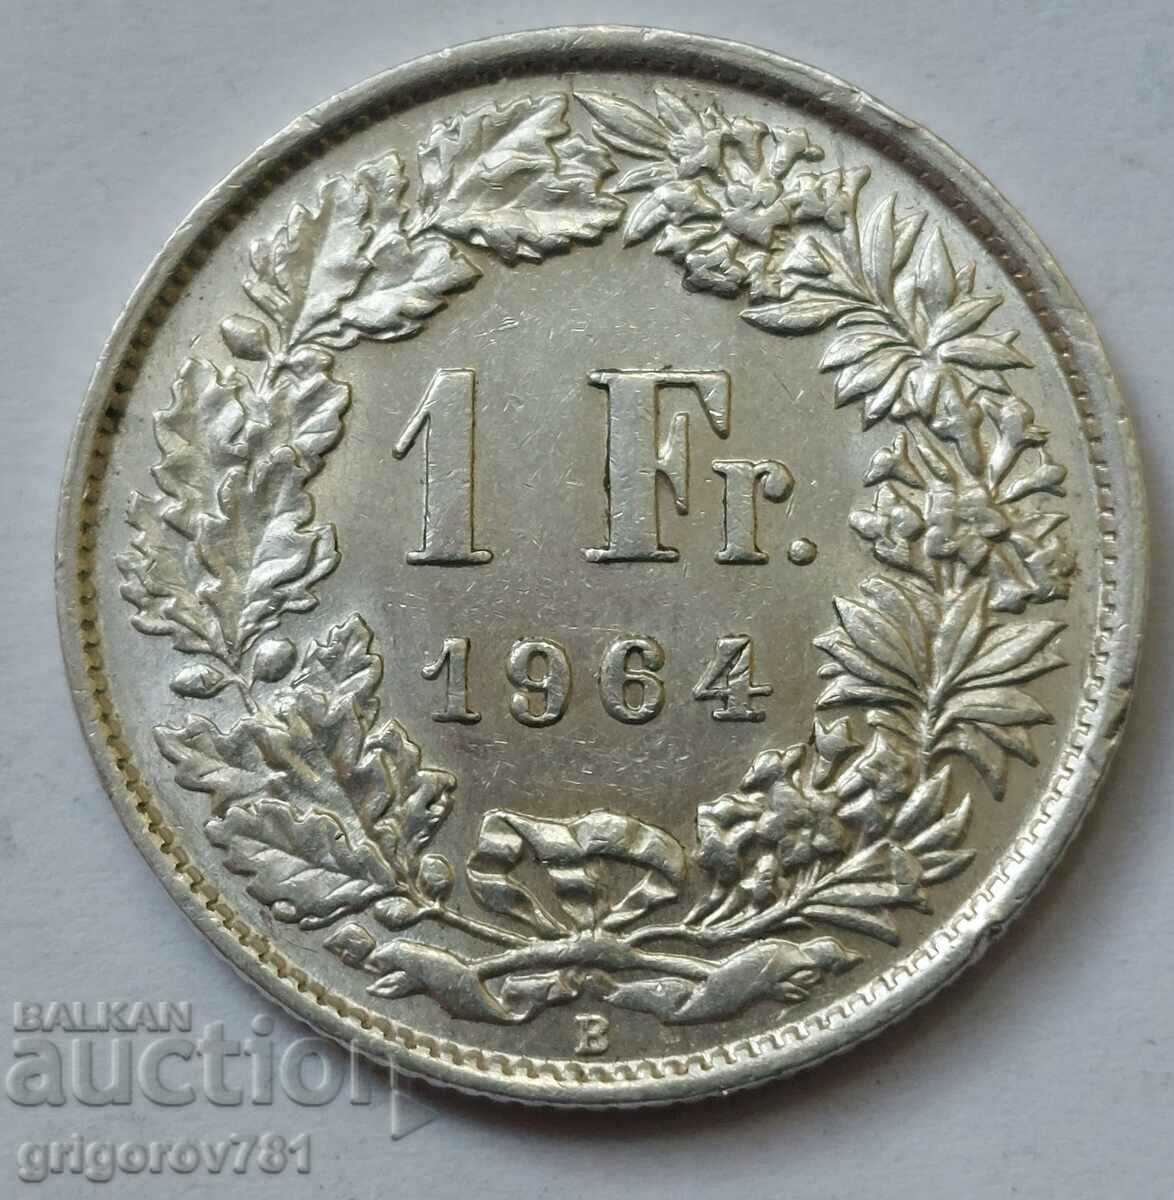 1 Franc Silver Switzerland 1964 B - Silver Coin #1